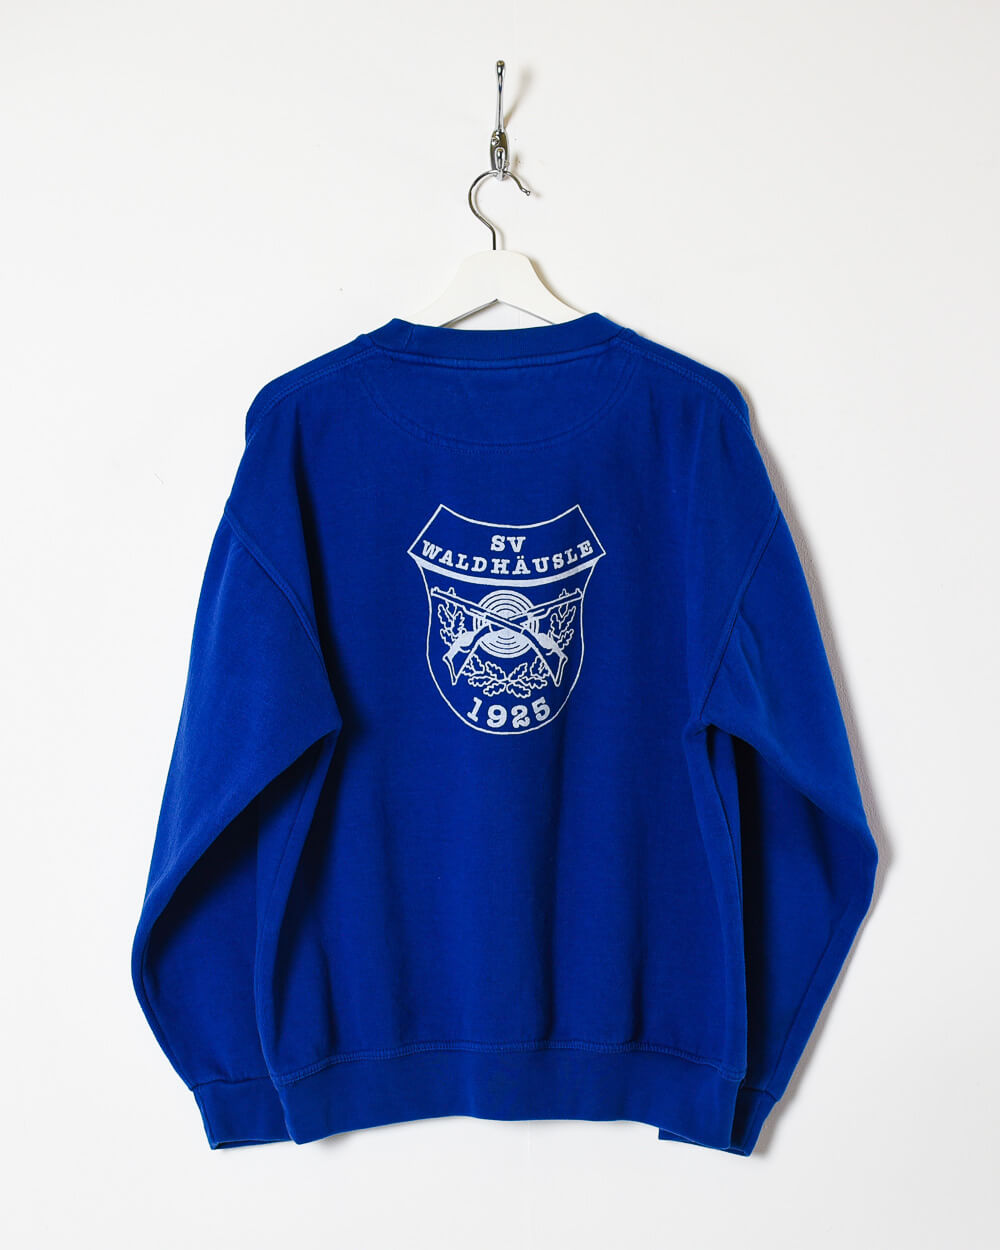 Blue Jako Sv Waldhausle 1925 Sweatshirt - Medium